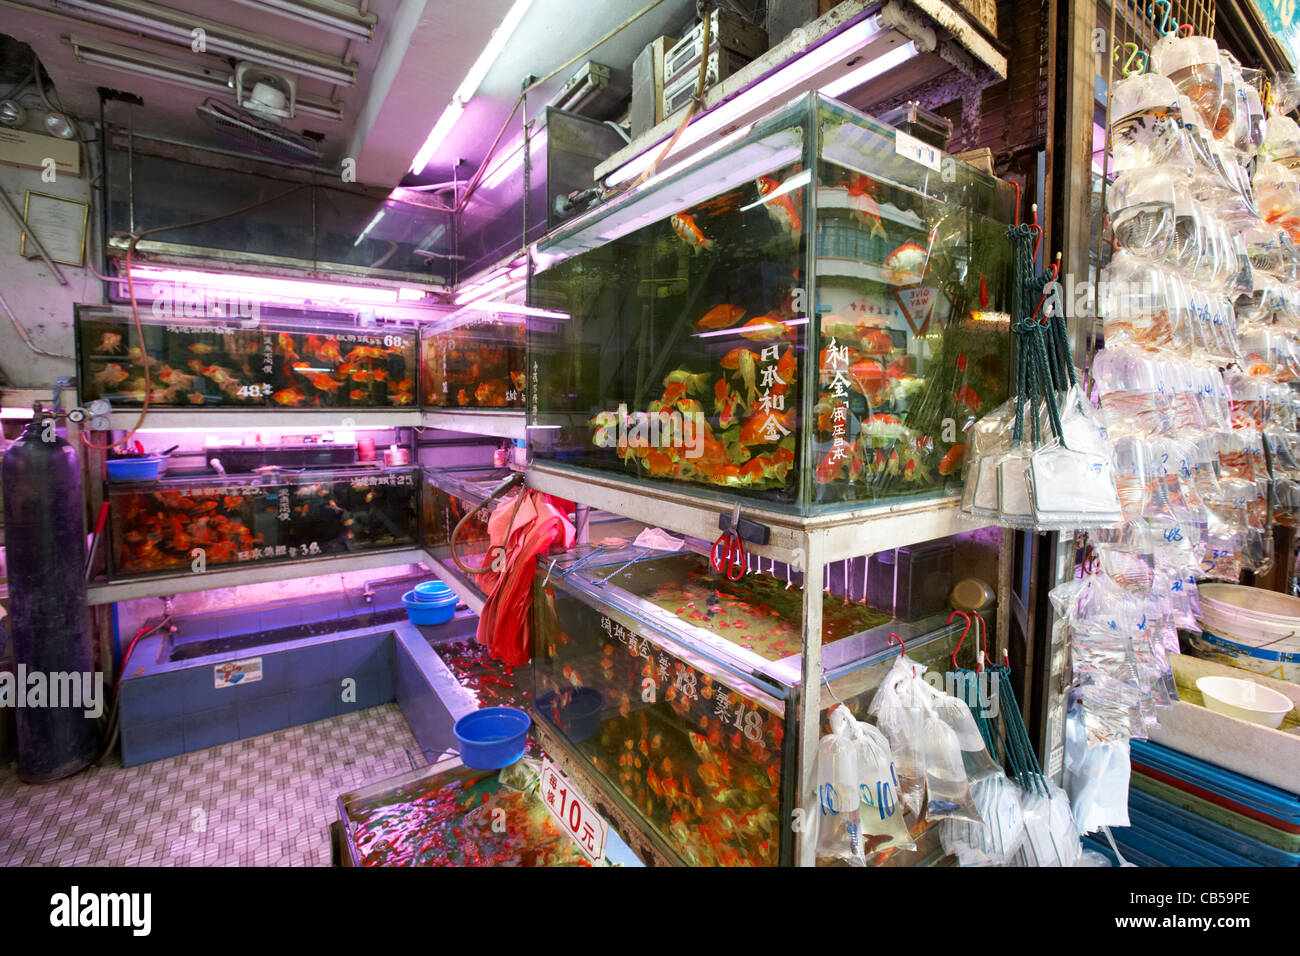 Aquaria pieno di pesci rossi in un petshop nel mercato a mercato goldfish street Mong Kok distretto di Kowloon hong kong cina della RAS di Hong Kong Foto Stock